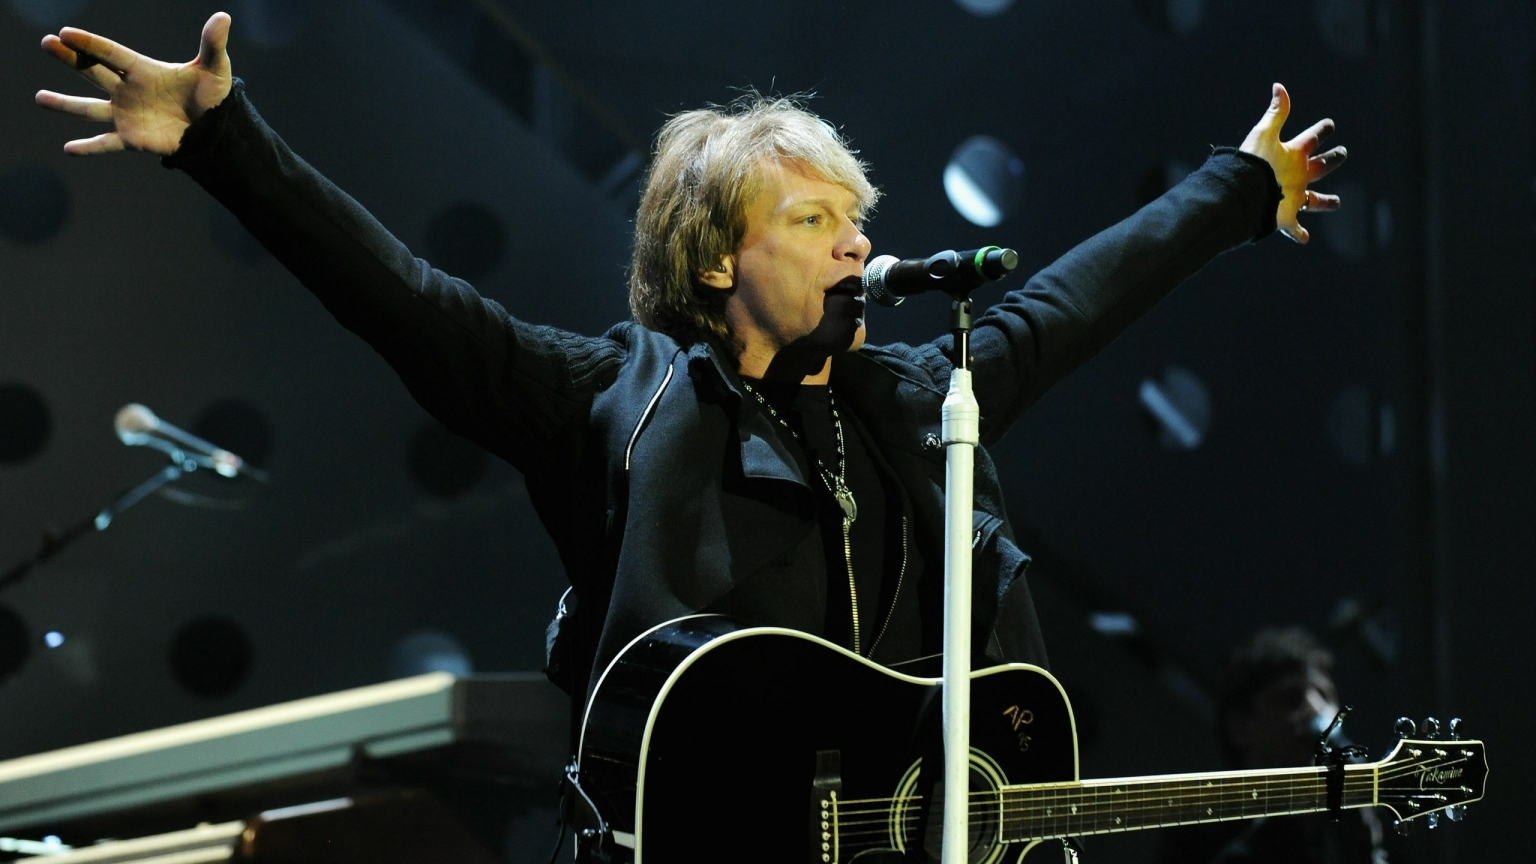 Bon Jovi Live Concert for 1536 x 864 HDTV resolution